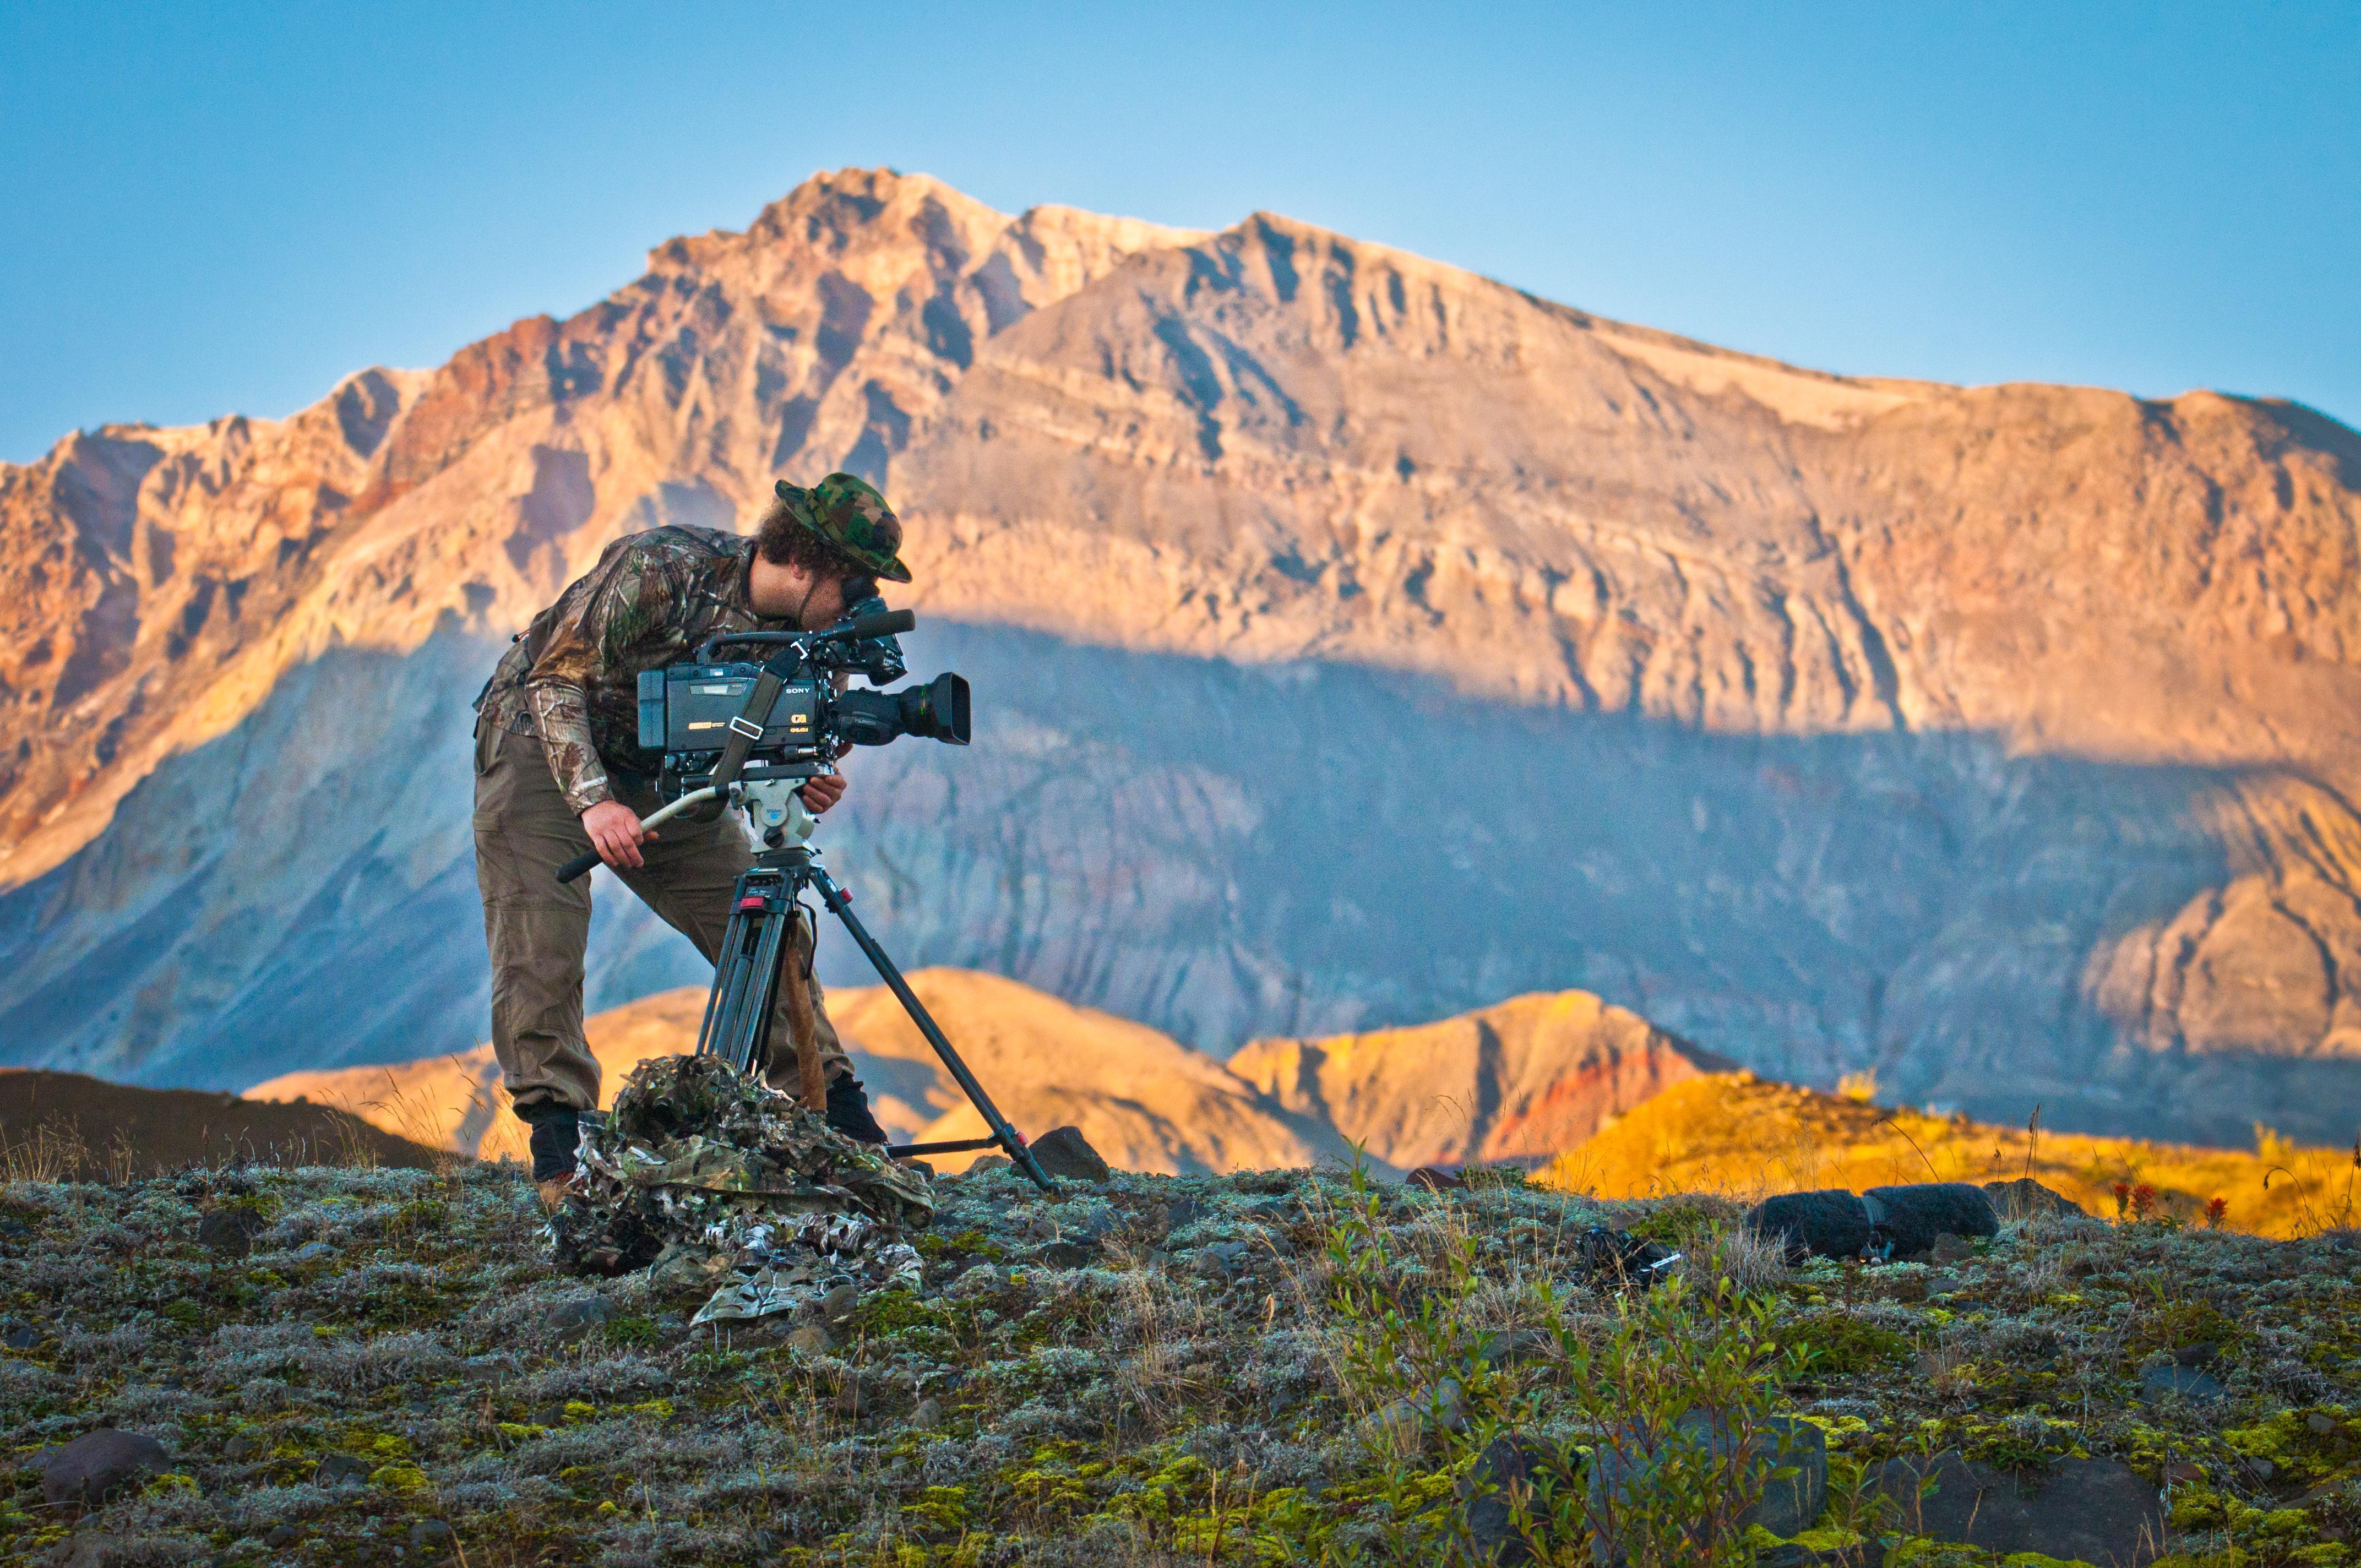 OPB's senior videographer Michael Bendixen filming at Mount St. Helens.